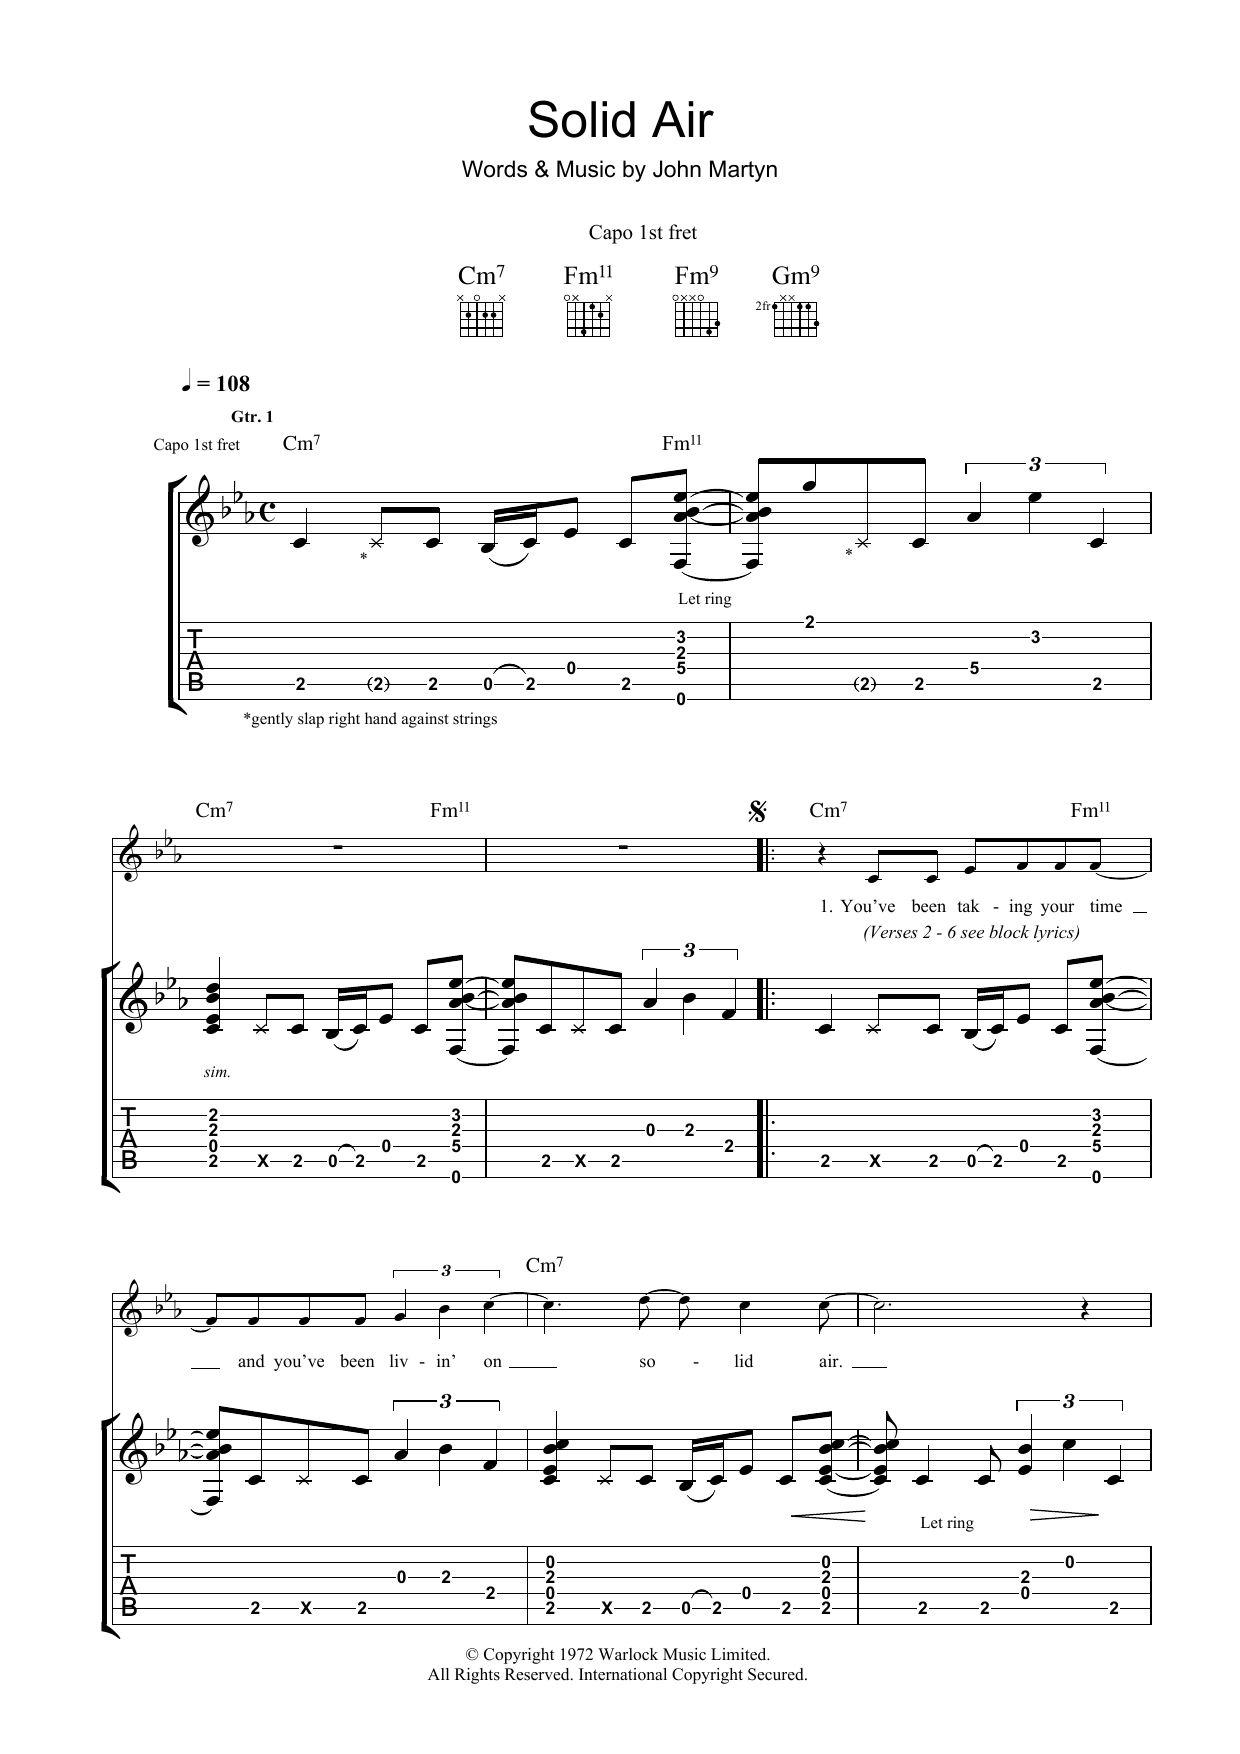 John Martyn Solid Air Sheet Music Notes & Chords for Guitar Tab - Download or Print PDF